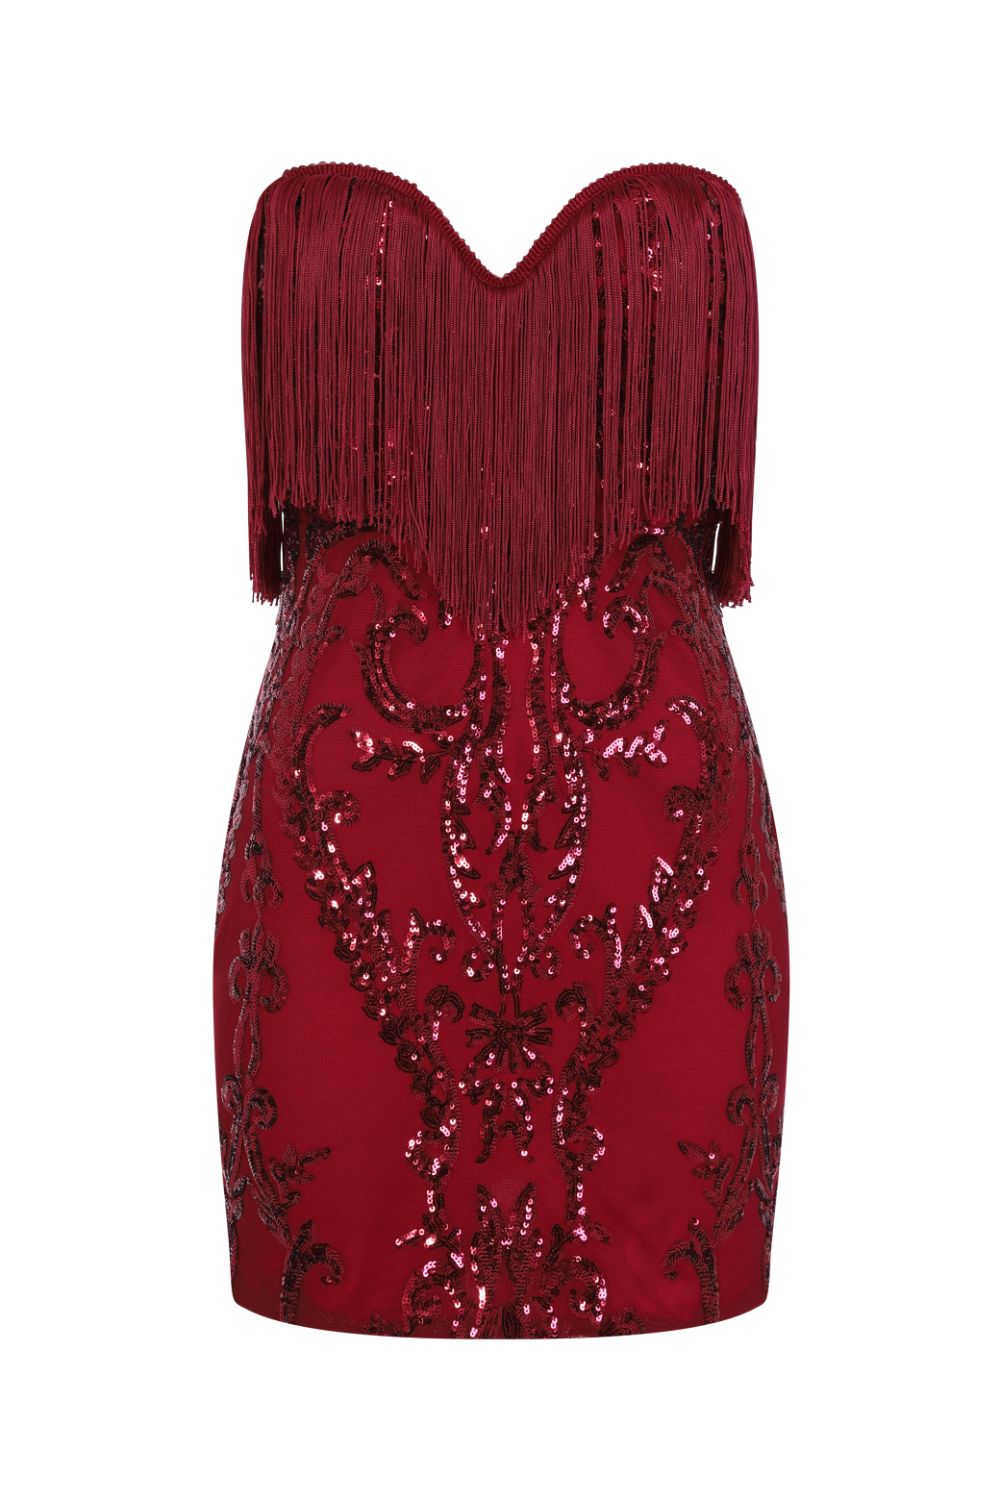 Promises Berry Luxe Sweetheart Tassel Fringe Sequin Bodycon Dress